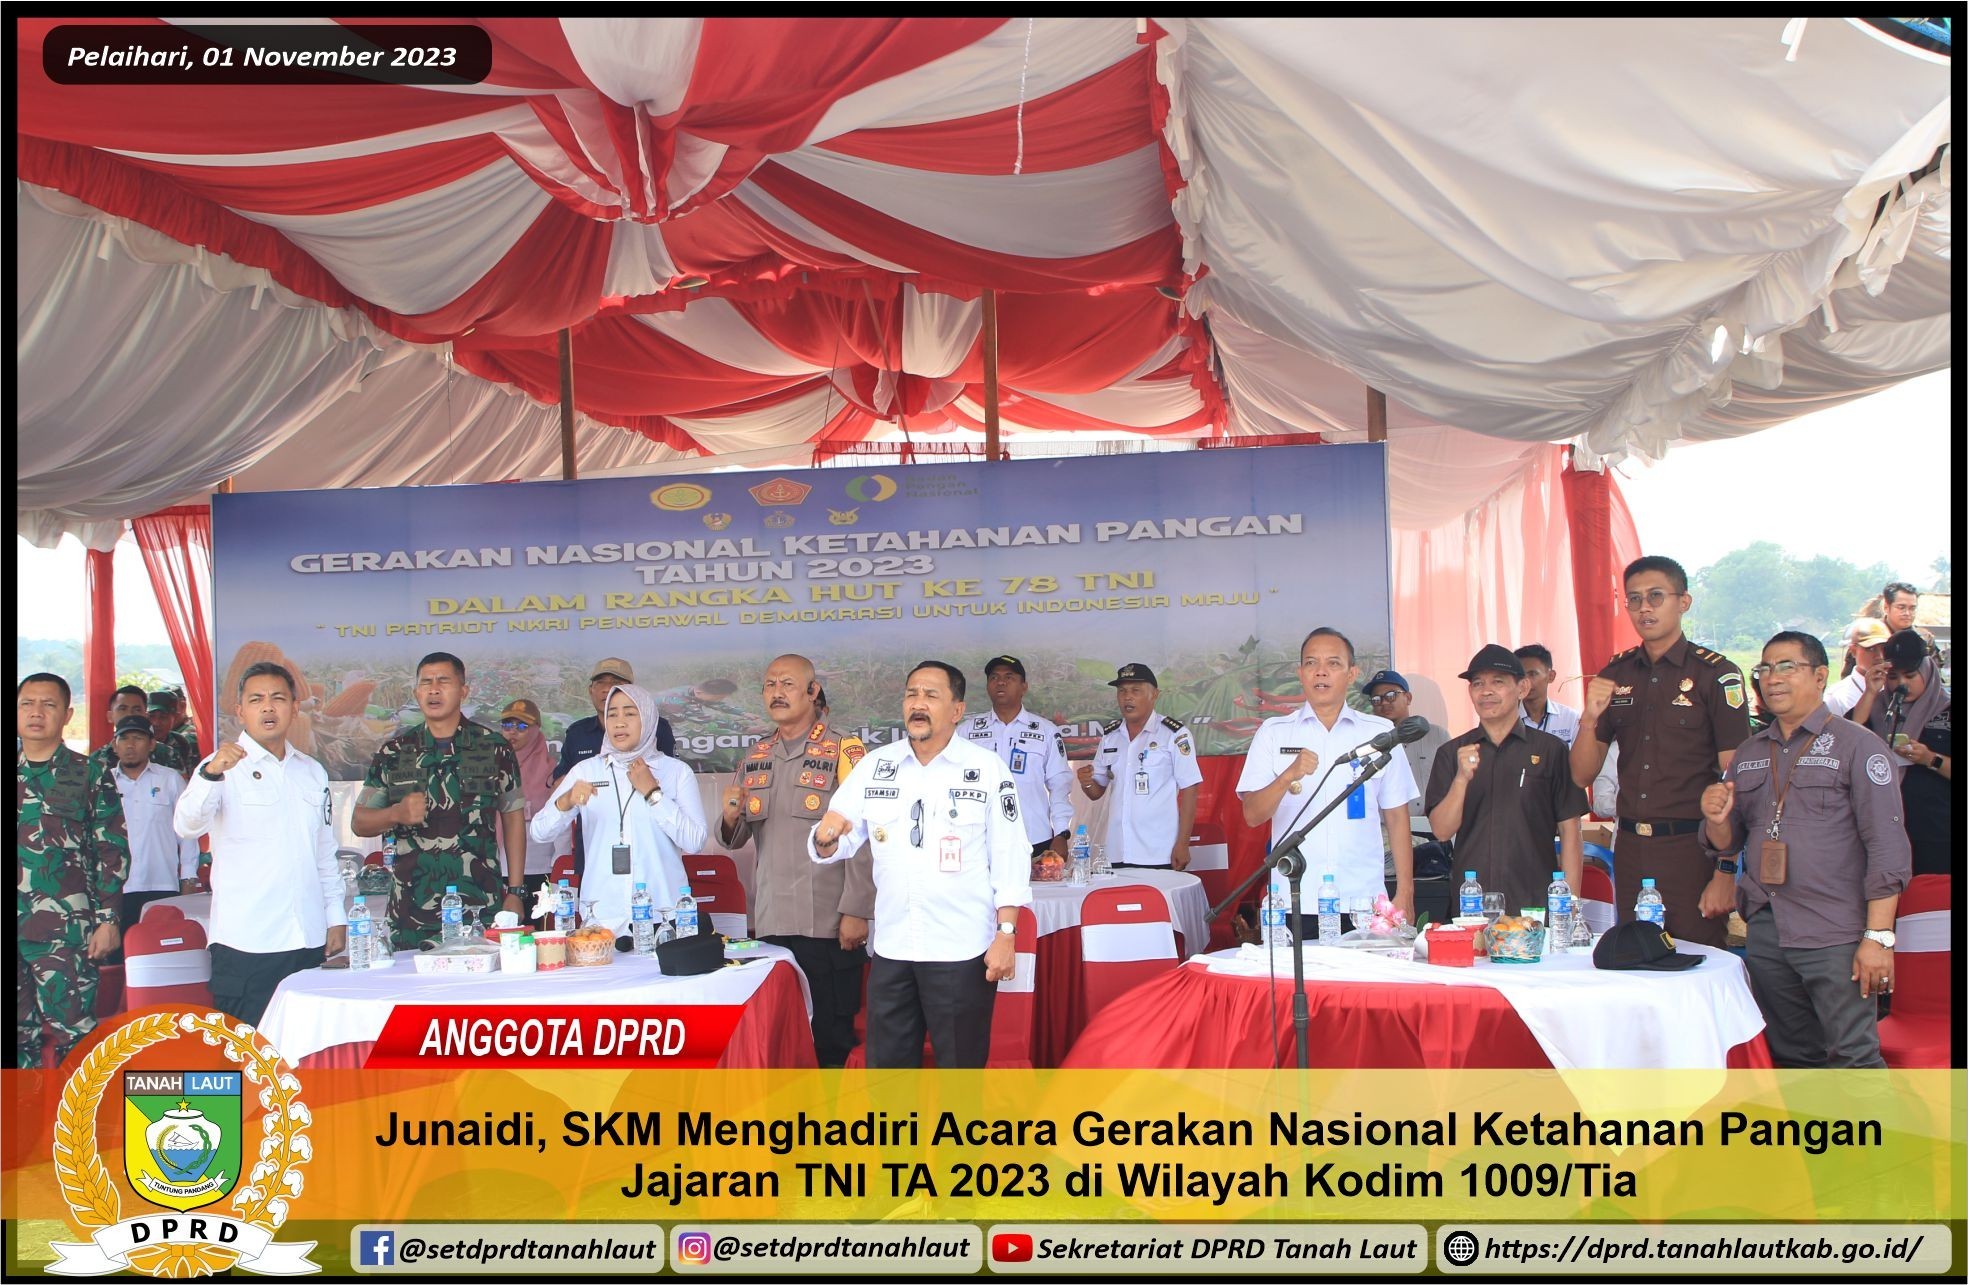 H. JUNAIDI, SKM ANGGOTA DPRD HADIRI ACARA GERAKAN NASIONAL KETAHAN PANGAN JAJARAN TNI TA 2023